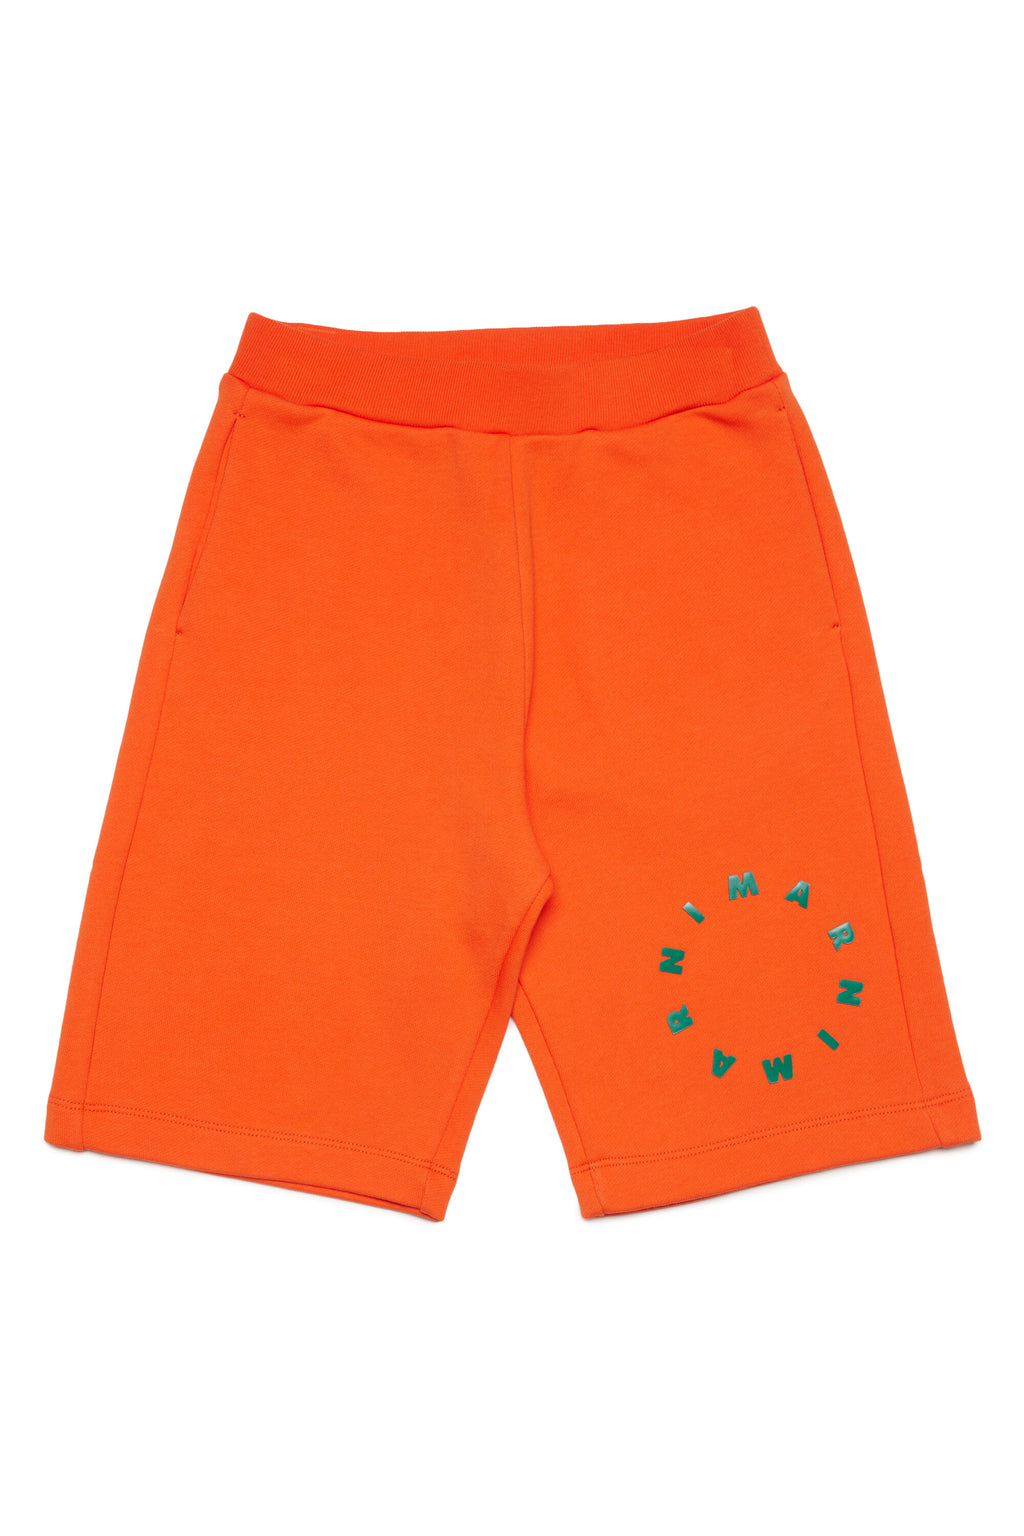 Pantalones cortos en chándal con logotipo redondo